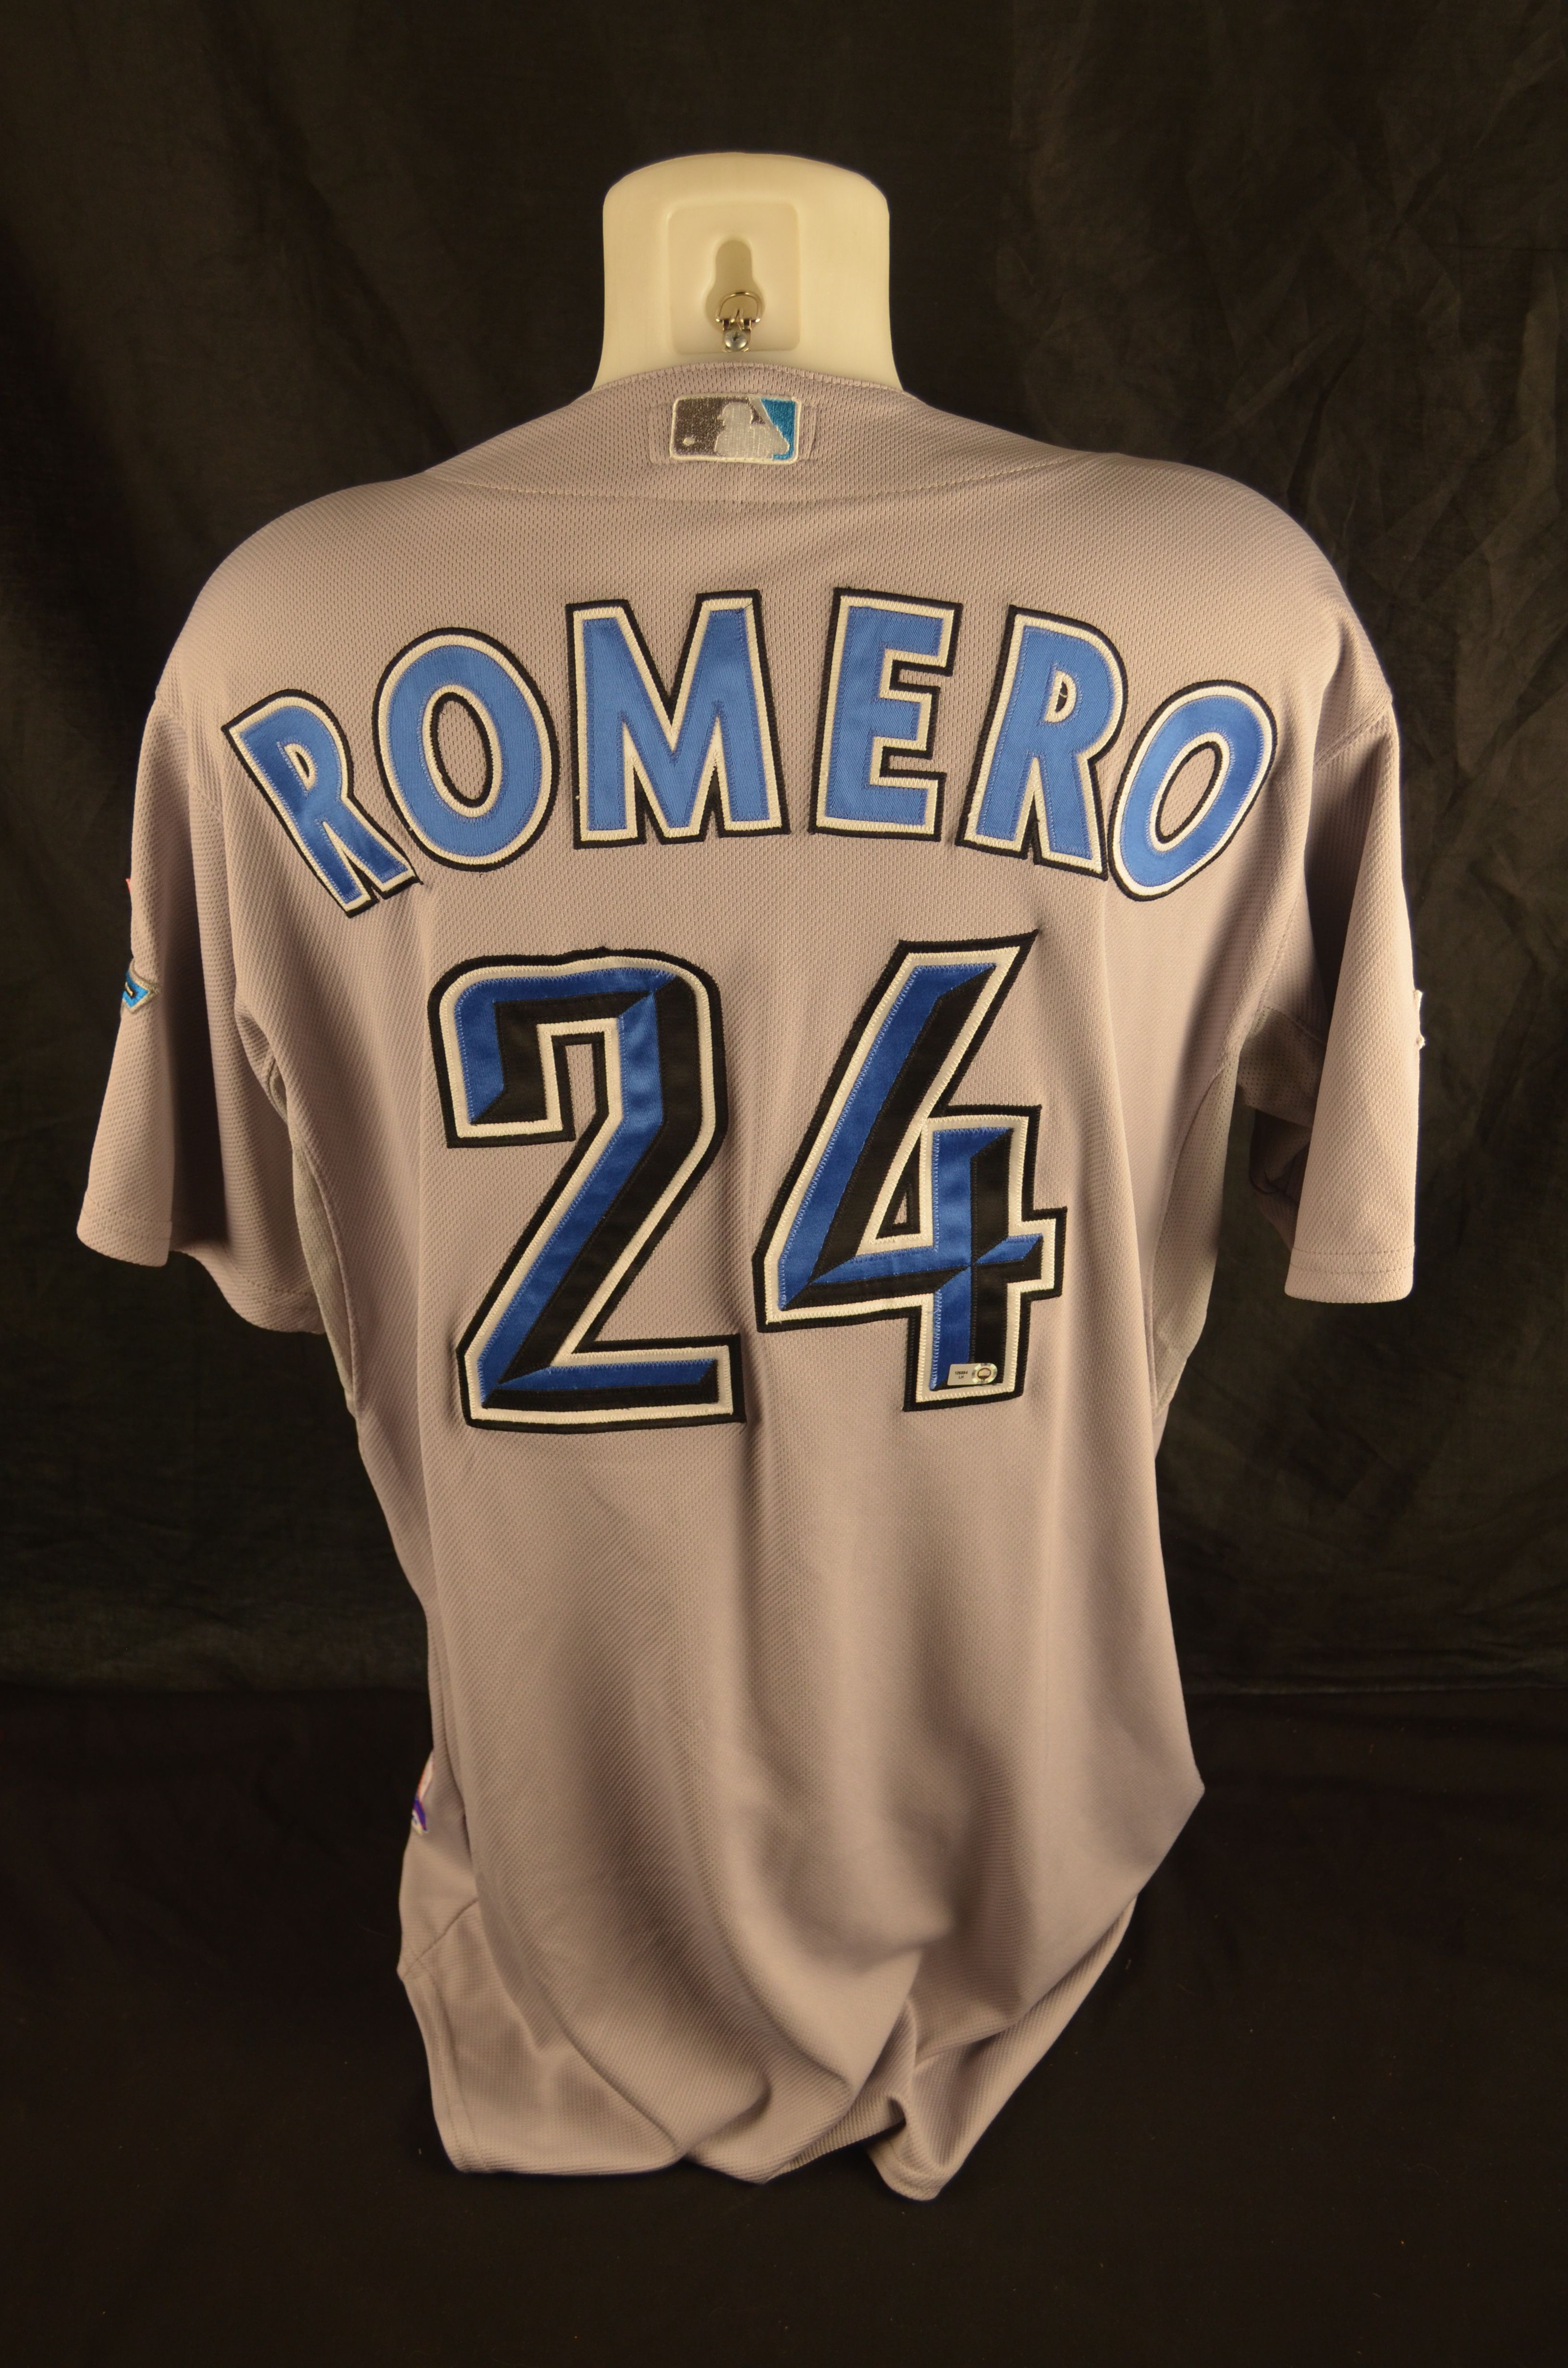 Ricky Romero, Toronto Blue Jays